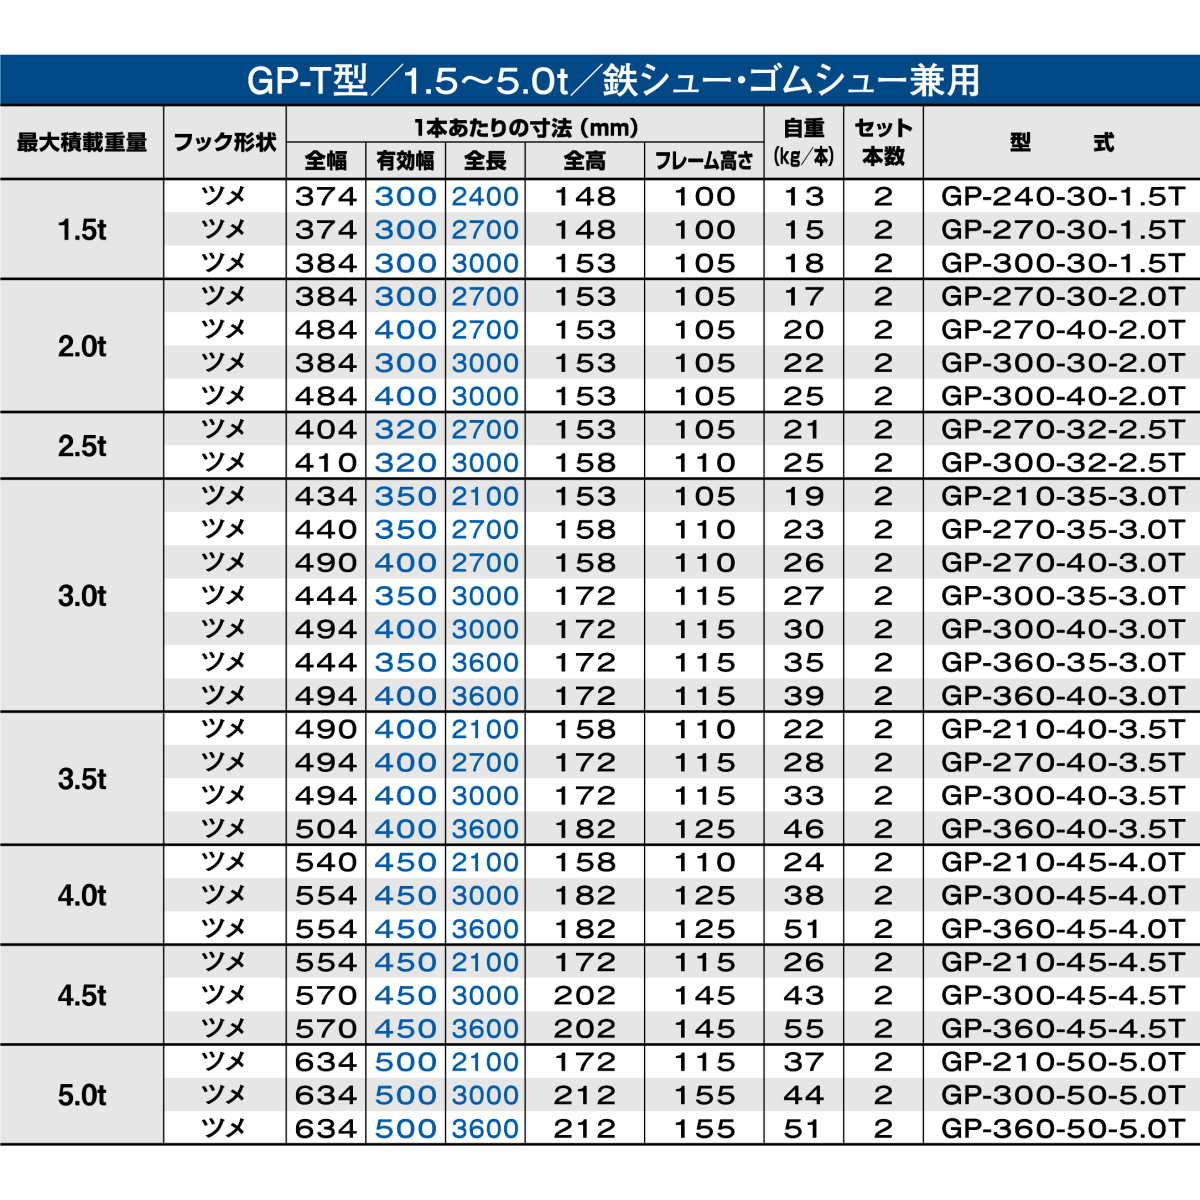 1.5 ton (1.5t) tab type total length 3000/ valid width 300(mm)[GP-300-30-1.5T] Showa era aluminium bridge 2 pcs set 